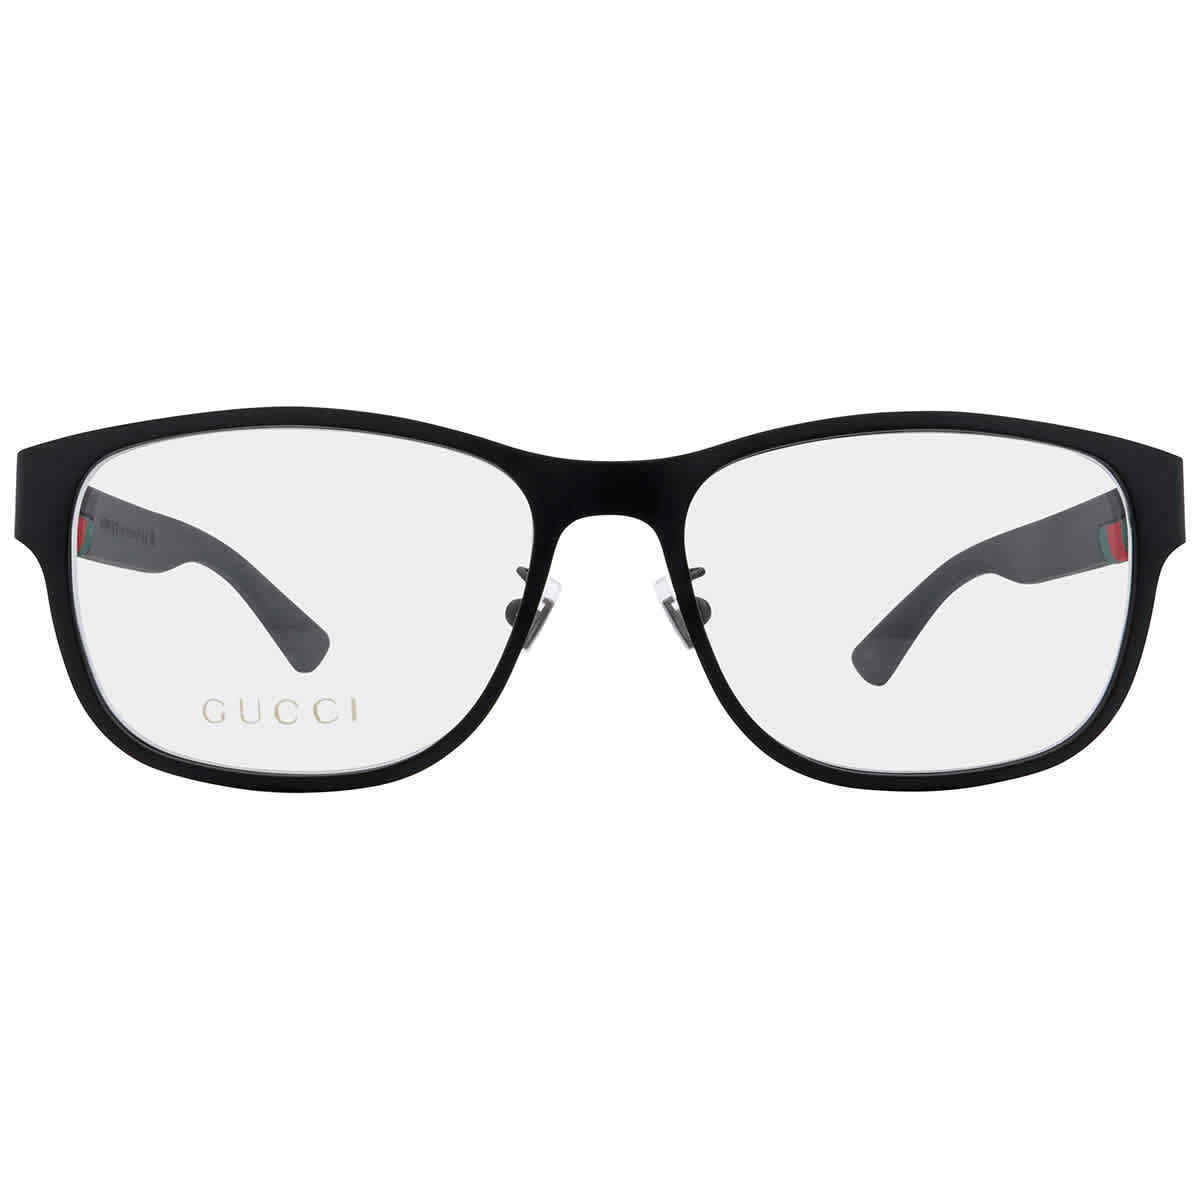 Gucci GG0013o-001 55mm New Eyeglasses